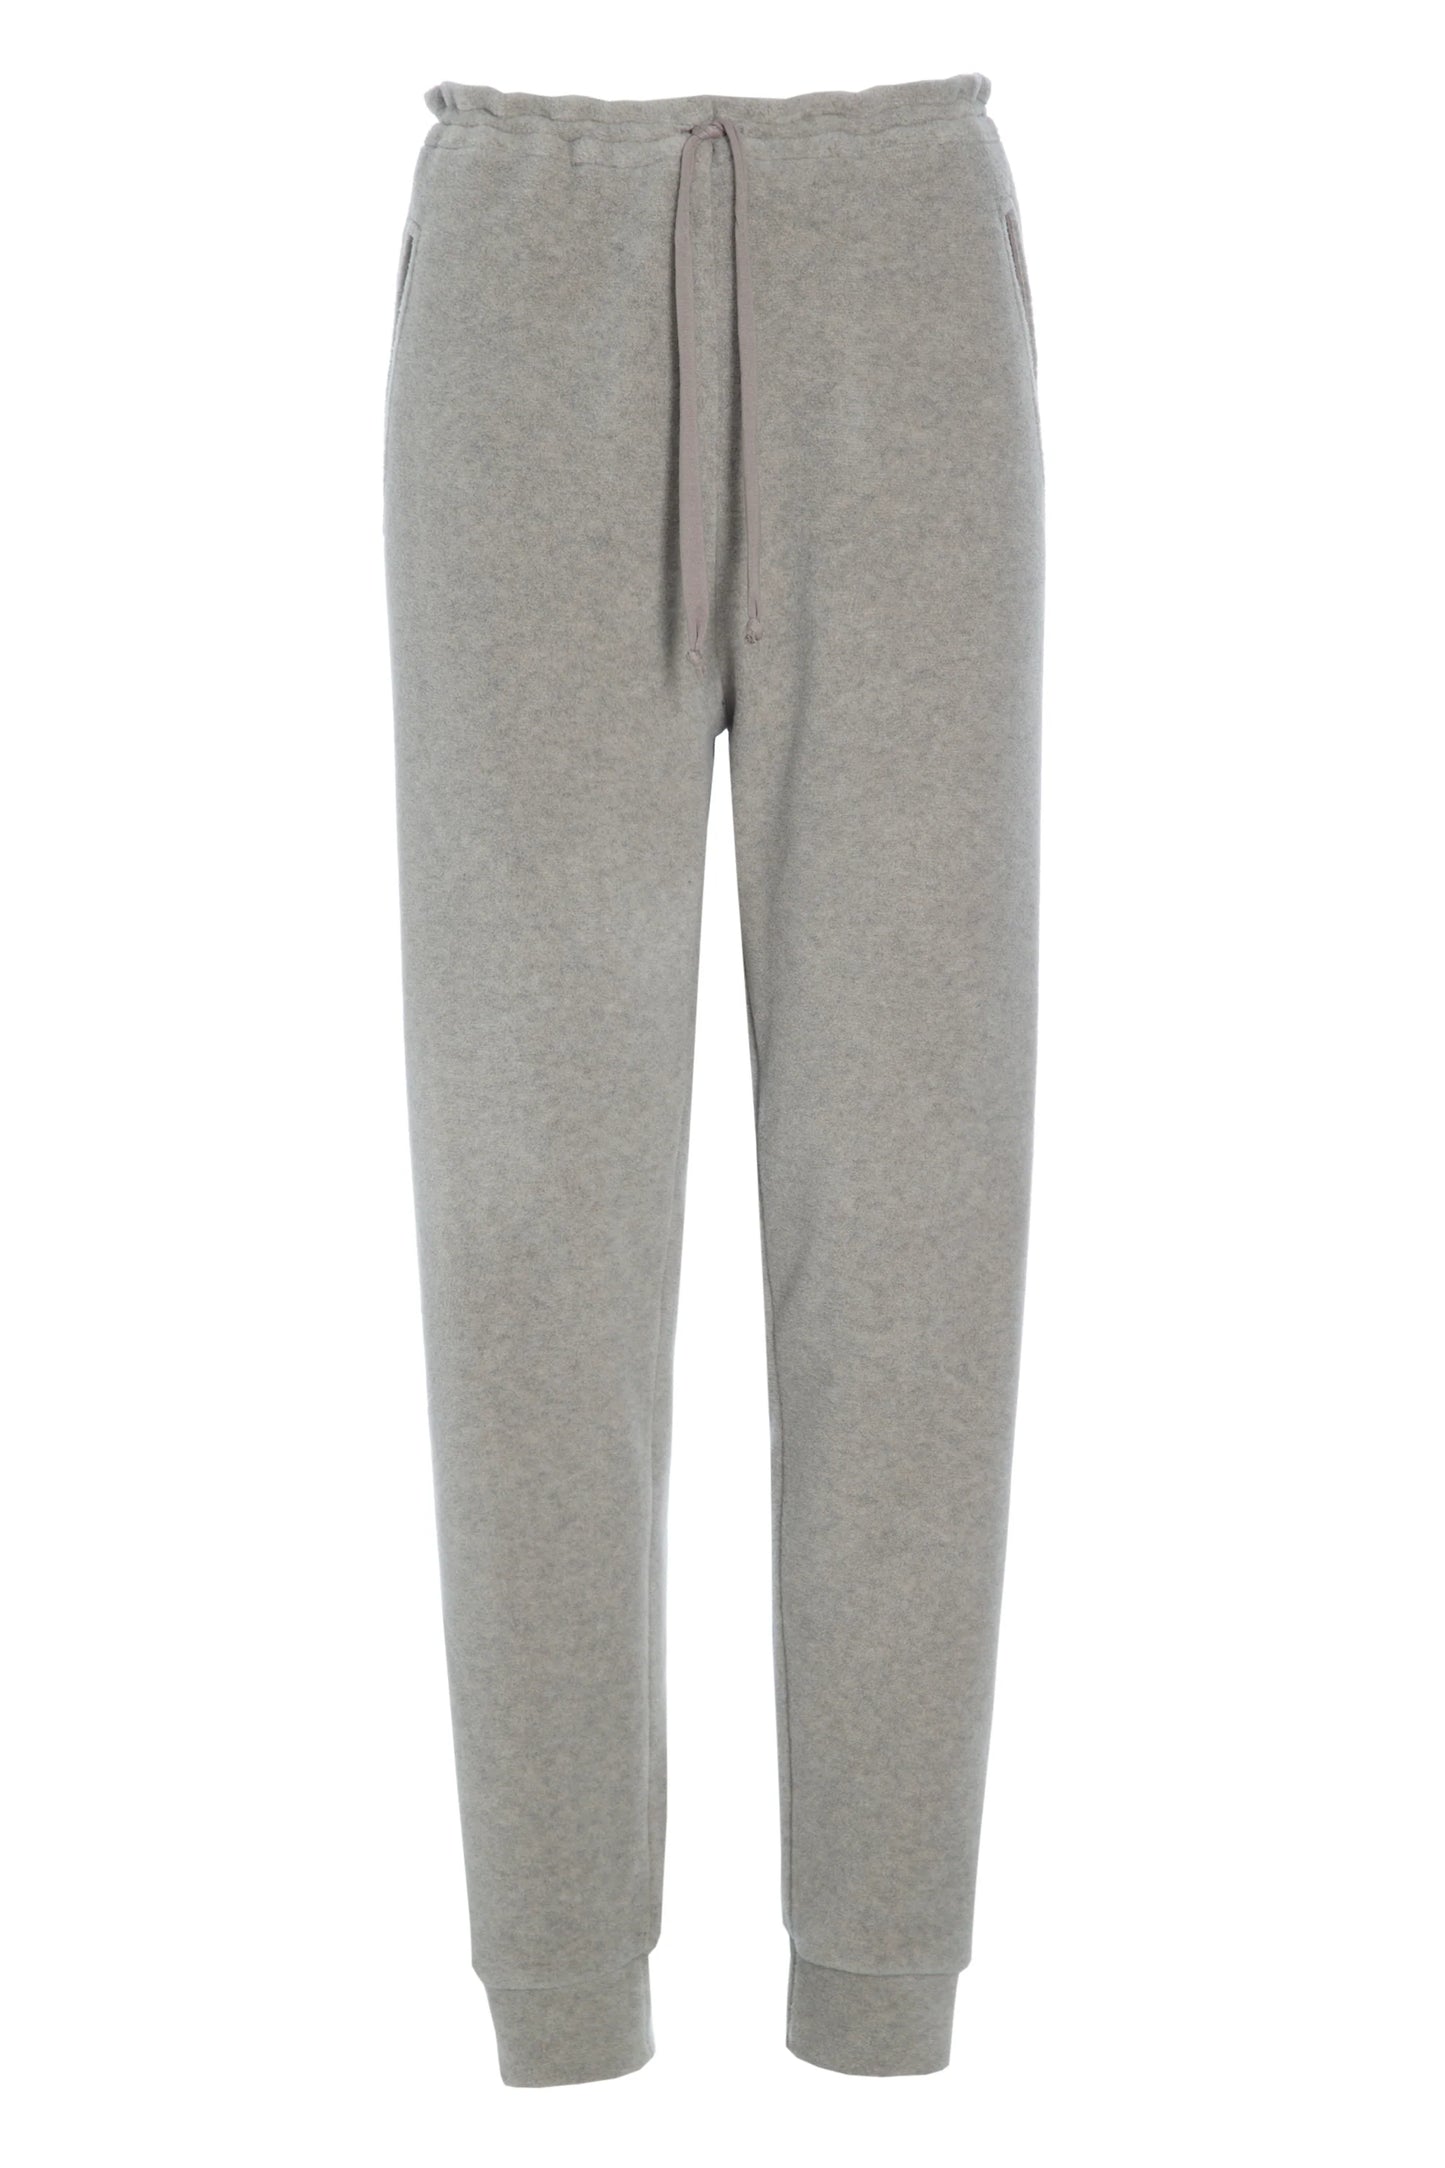 Danish fleece jogging pants 2110